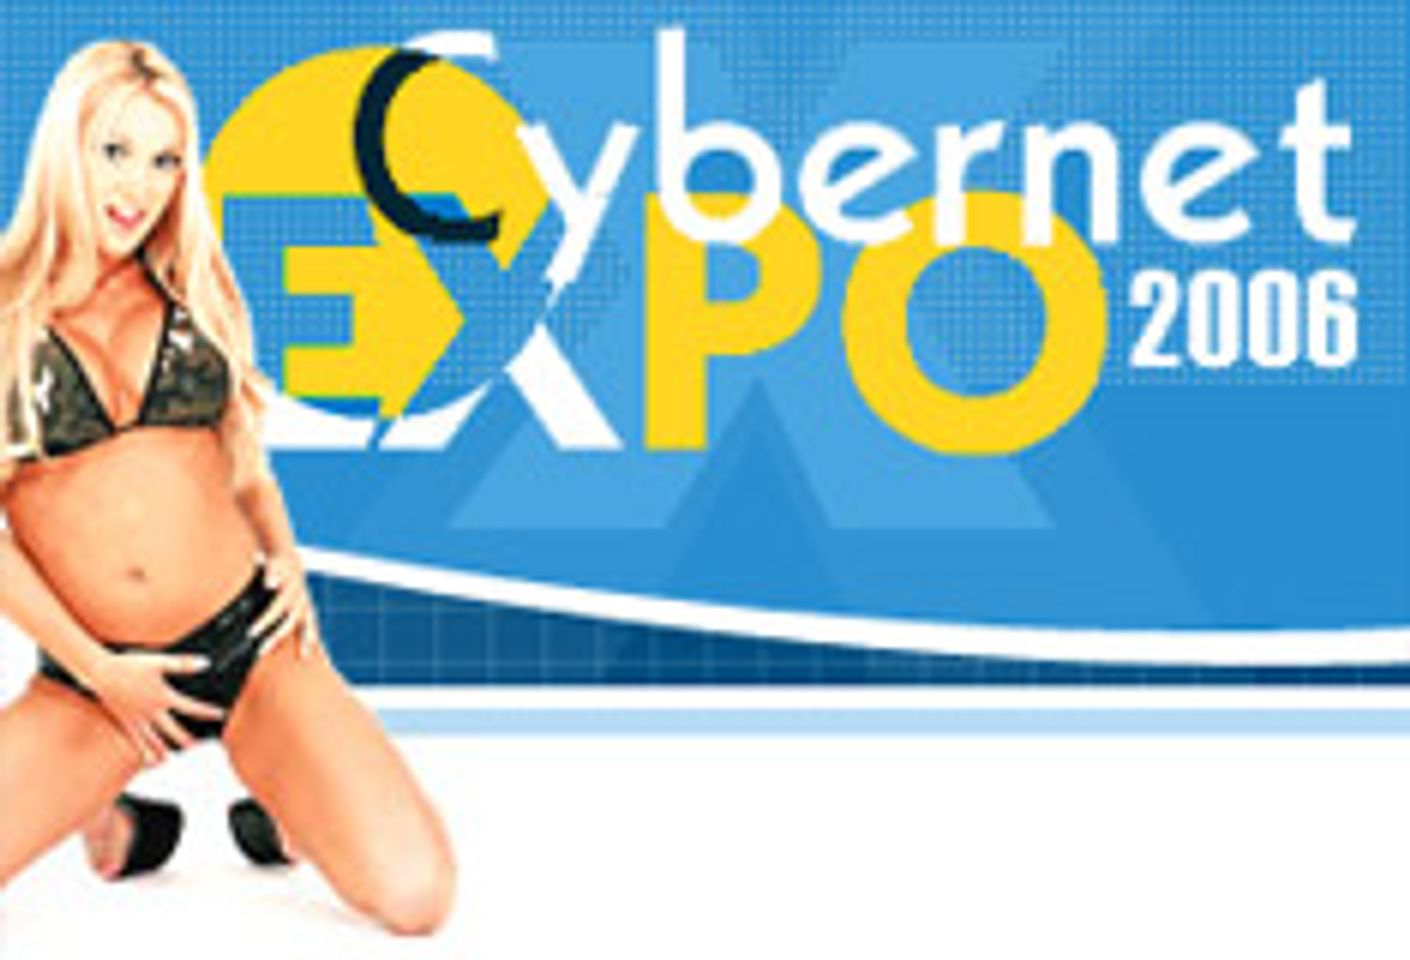 Cybernet Expo 2006 Early Bird Registration Opens